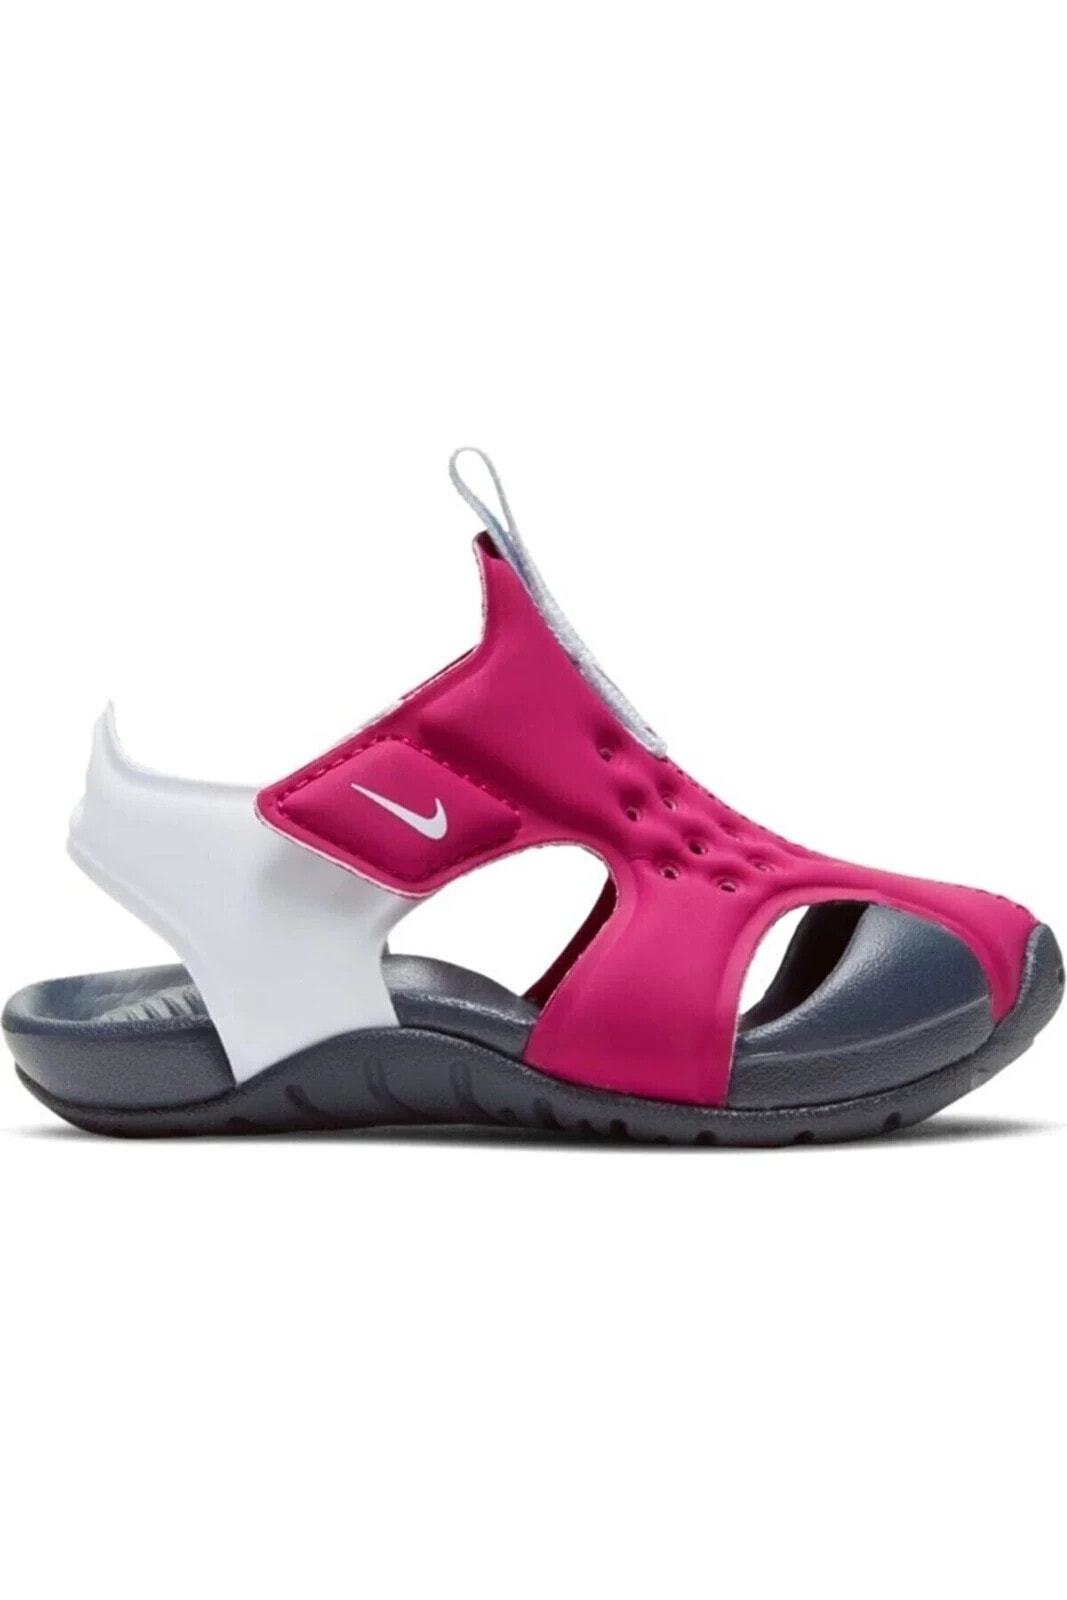 Nike Sunray Protect 2 Pembe Kız Çocuk Sandalet 943826604